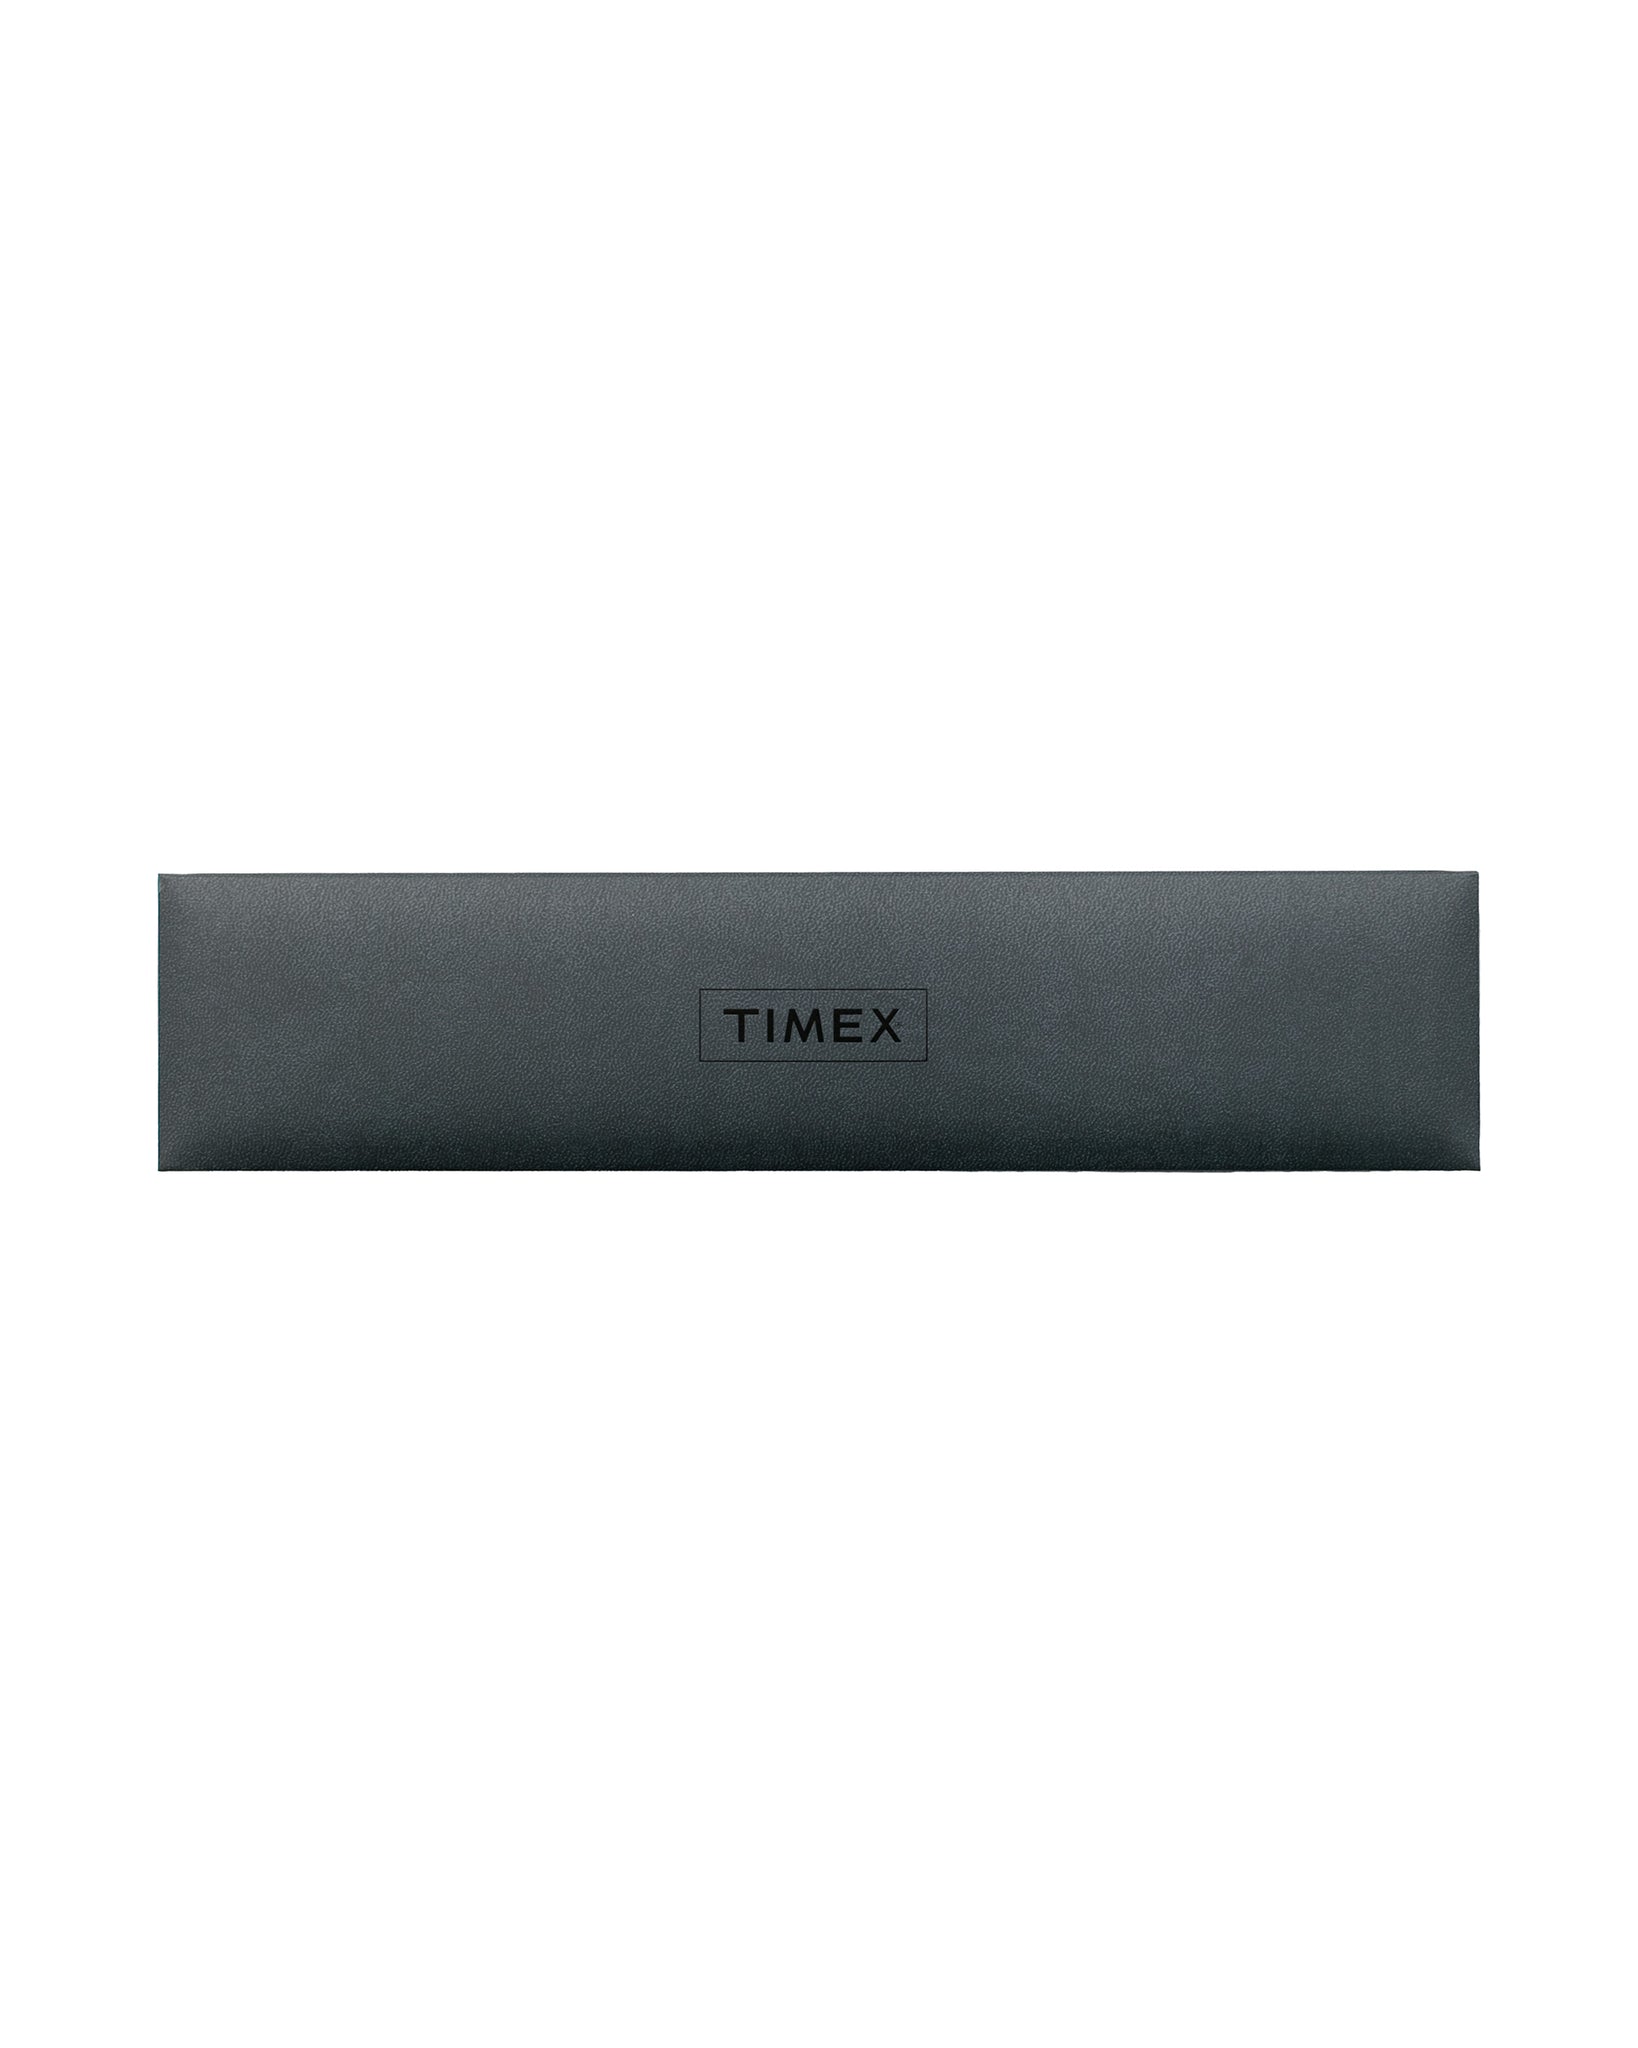 Timex Marlin Hand-Wound 34mm Box